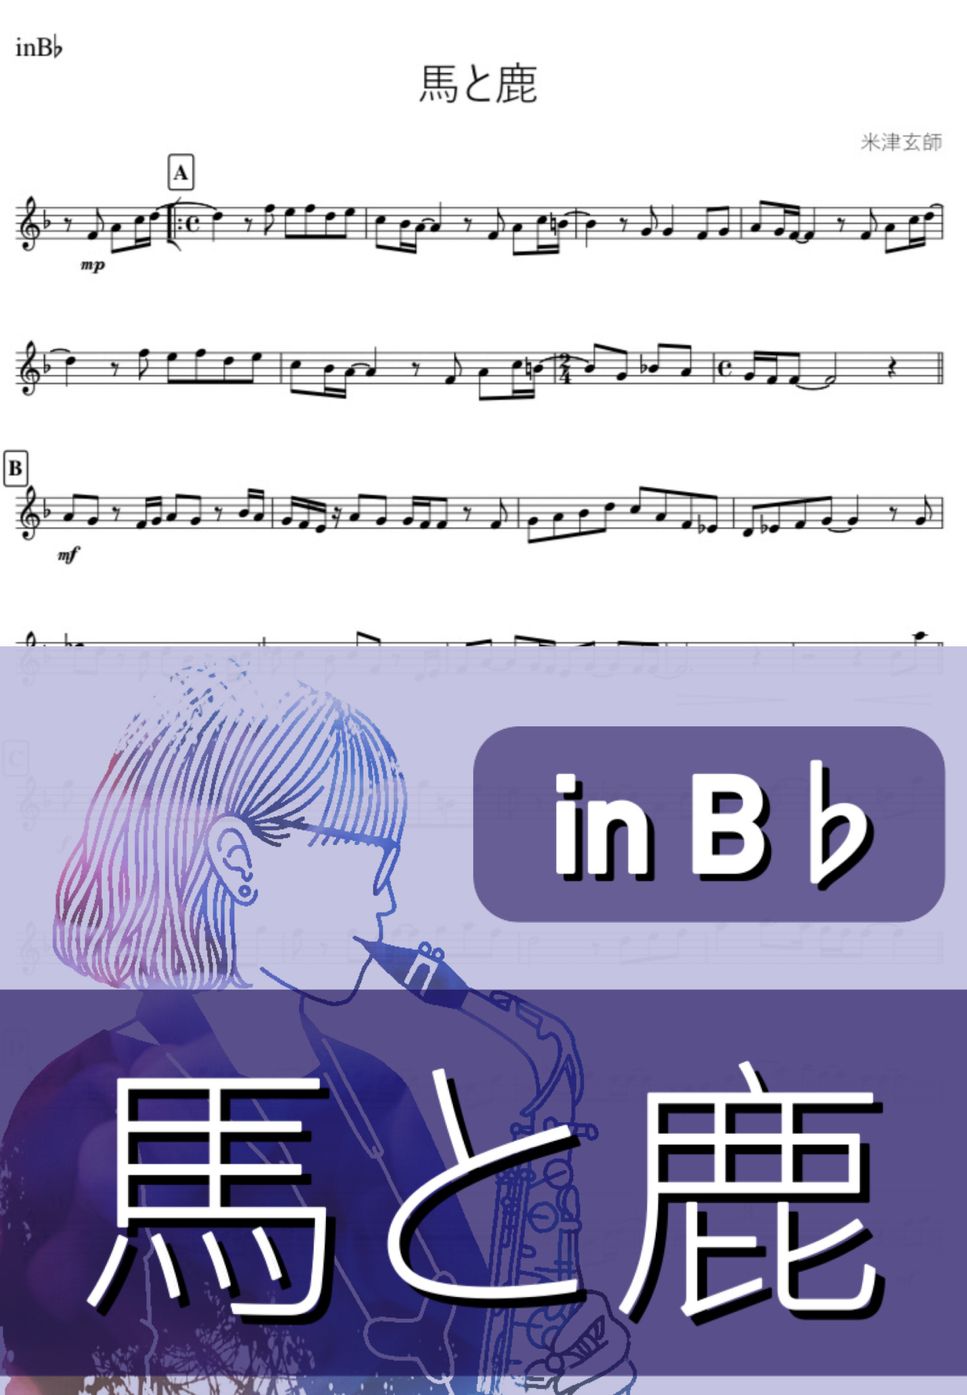 米津玄師 - 馬と鹿 (B♭) by kanamusic